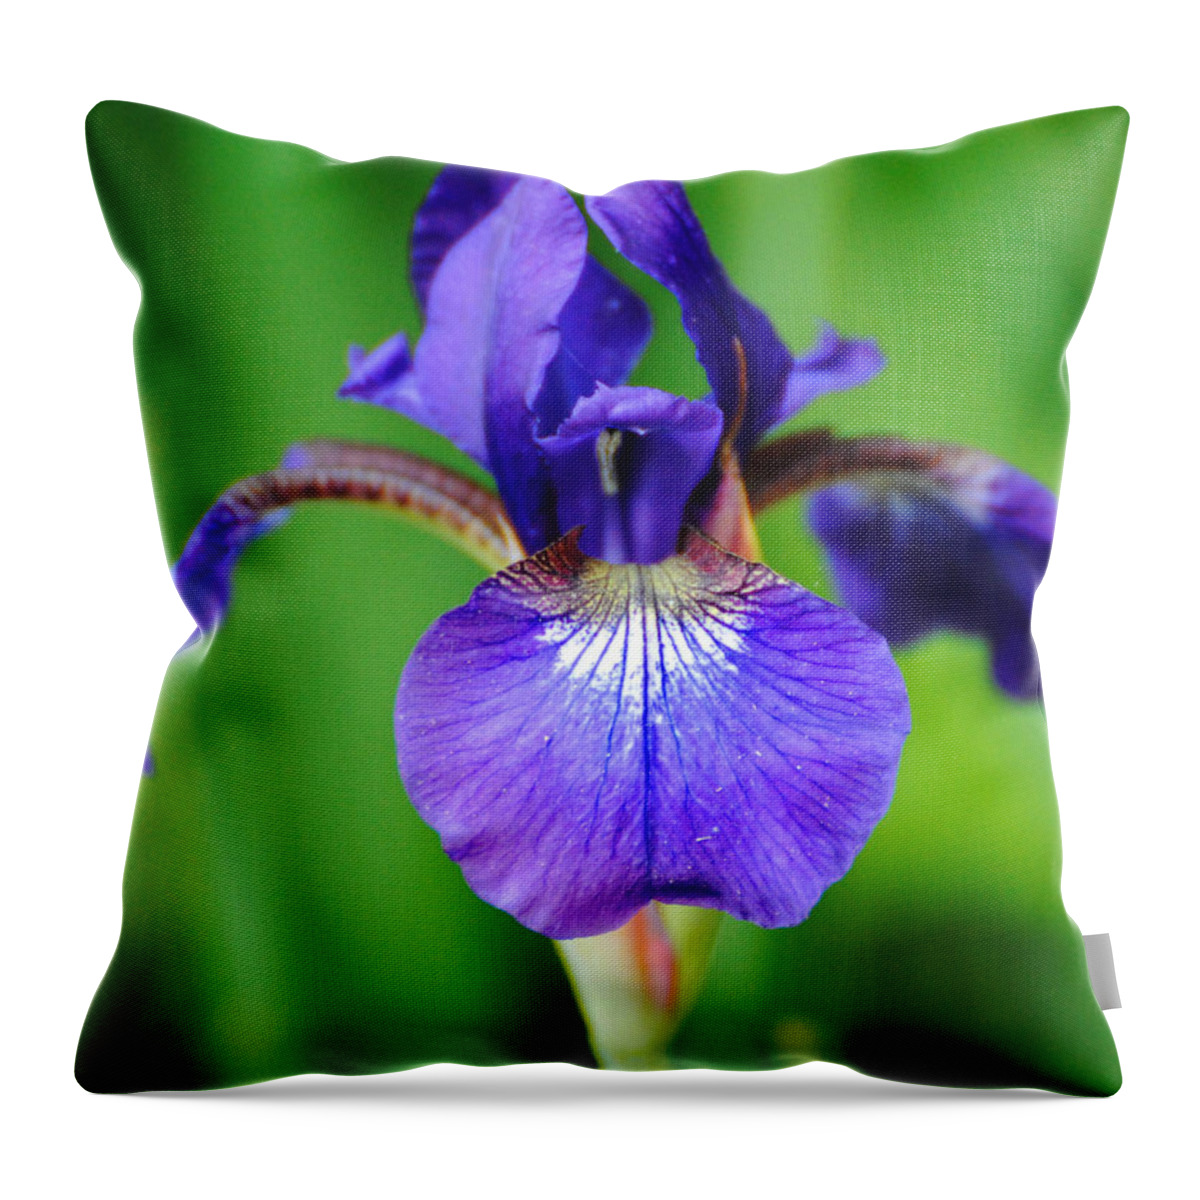 Beautiful Throw Pillow featuring the photograph Tiny Purple Iris by Jai Johnson